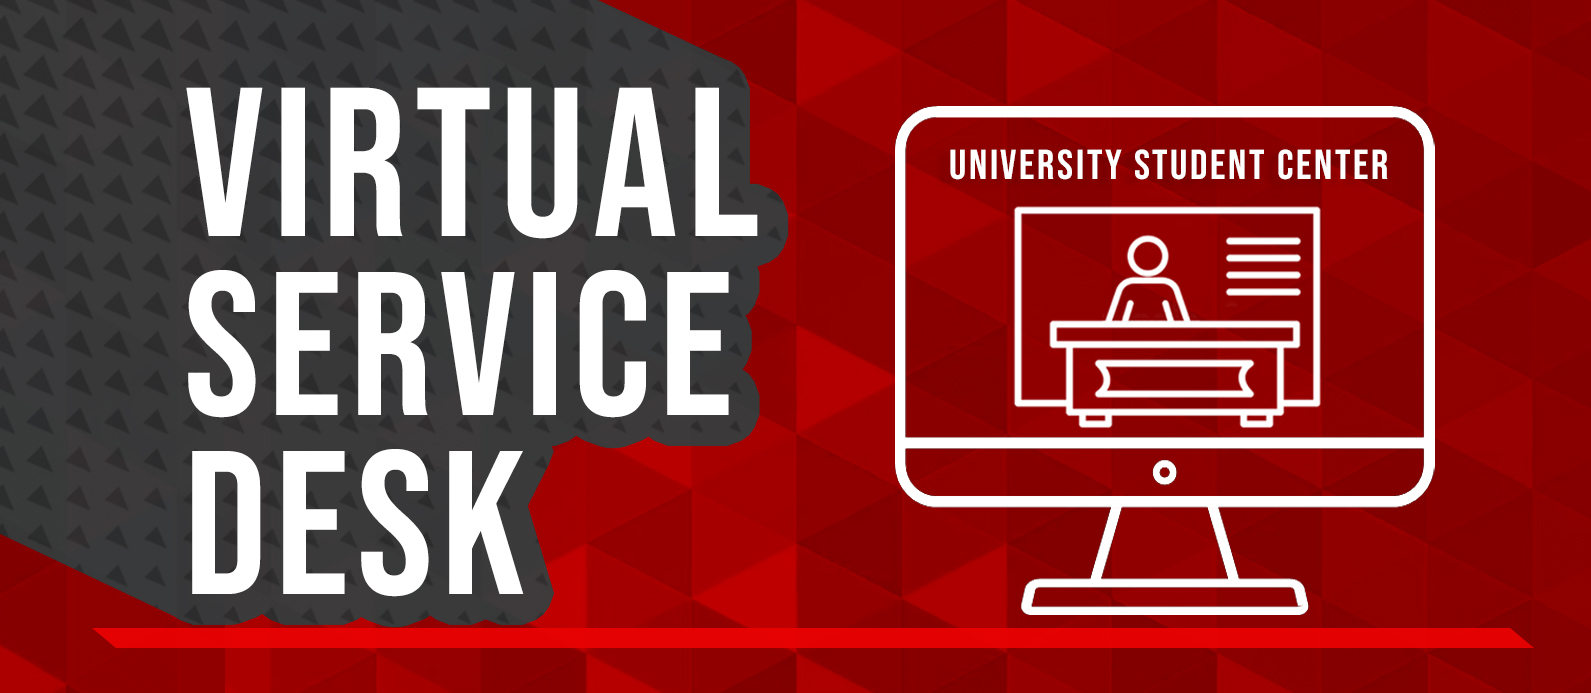 Virtual Service Desk Banner